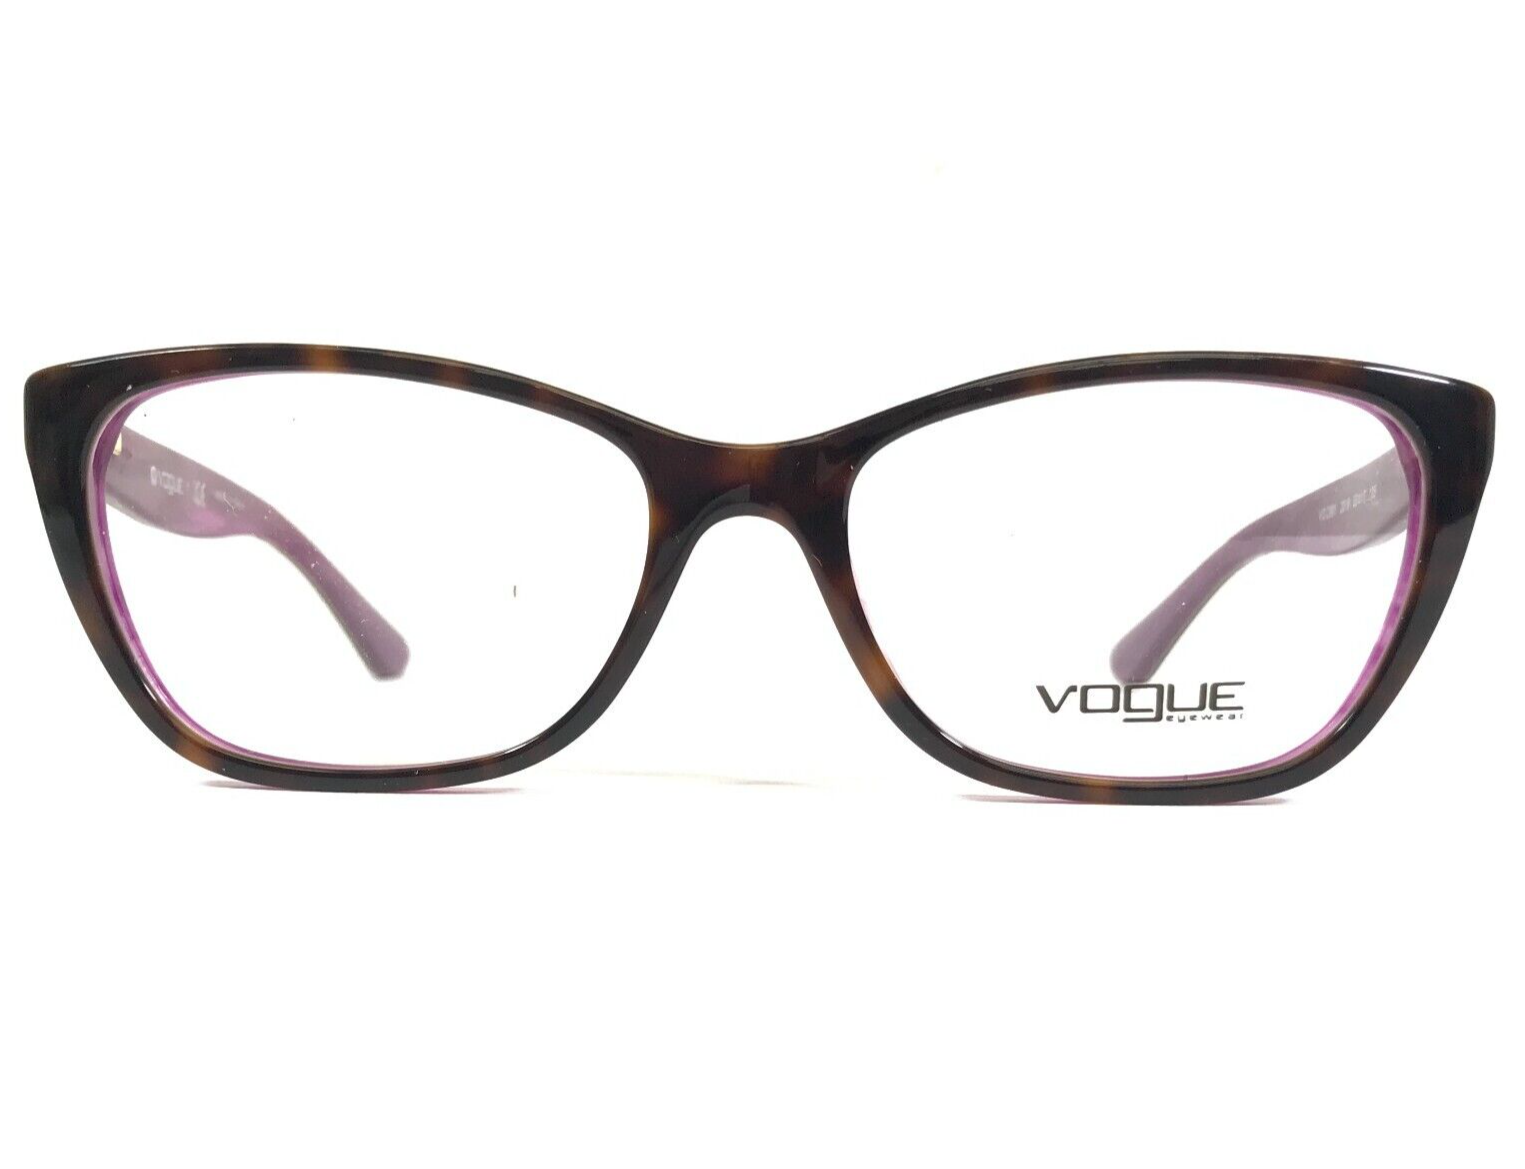 Vogue Eyeglasses Frames VO 2961 2019 Brown Purple Cat Eye Full Rim 53-17-135 - $55.89